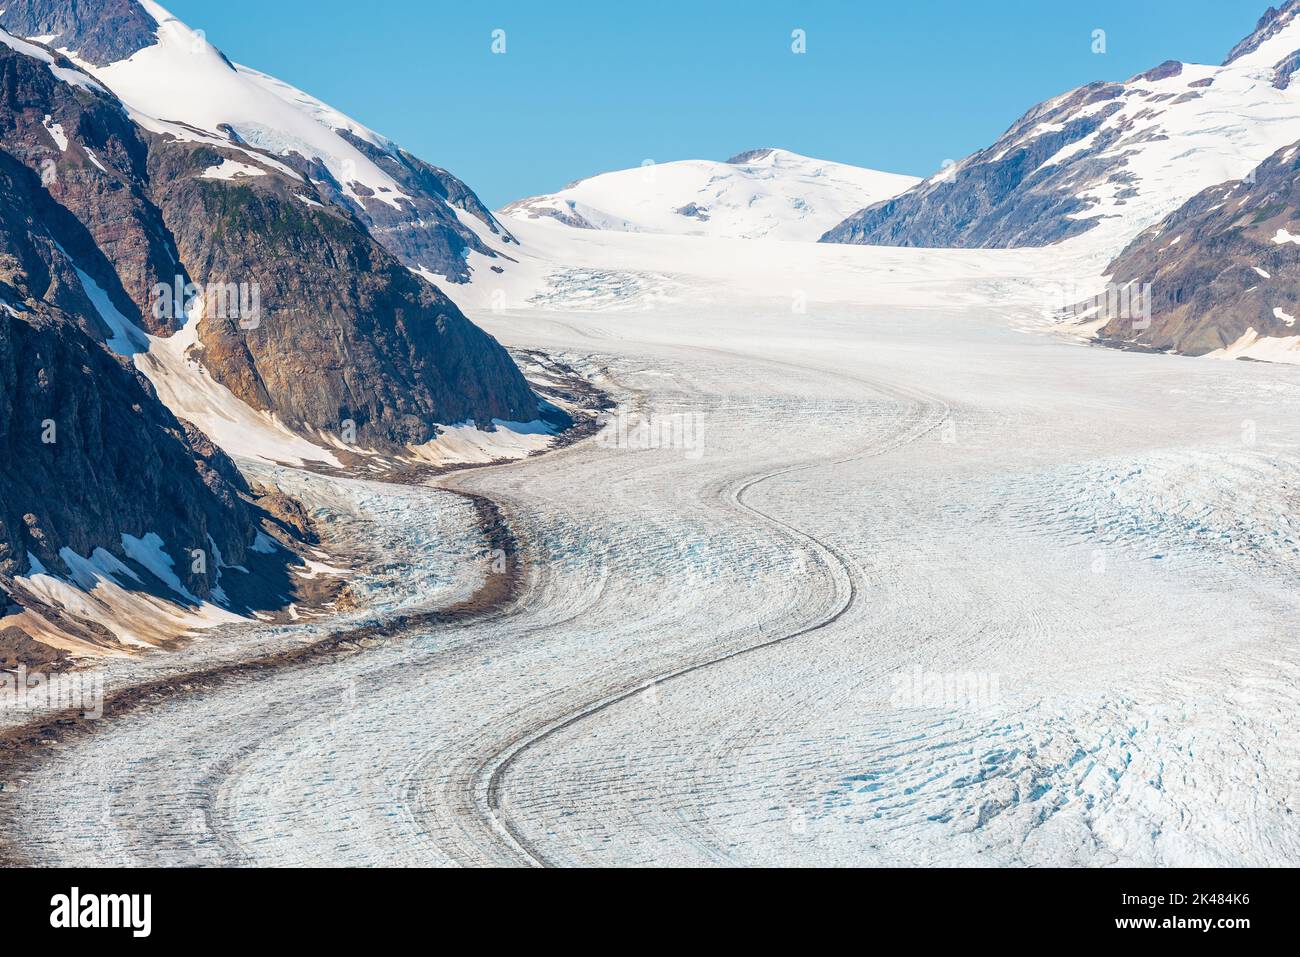 Salmon glacier glacial ice flow, Stewart, British Columbia, Canada. Stock Photo